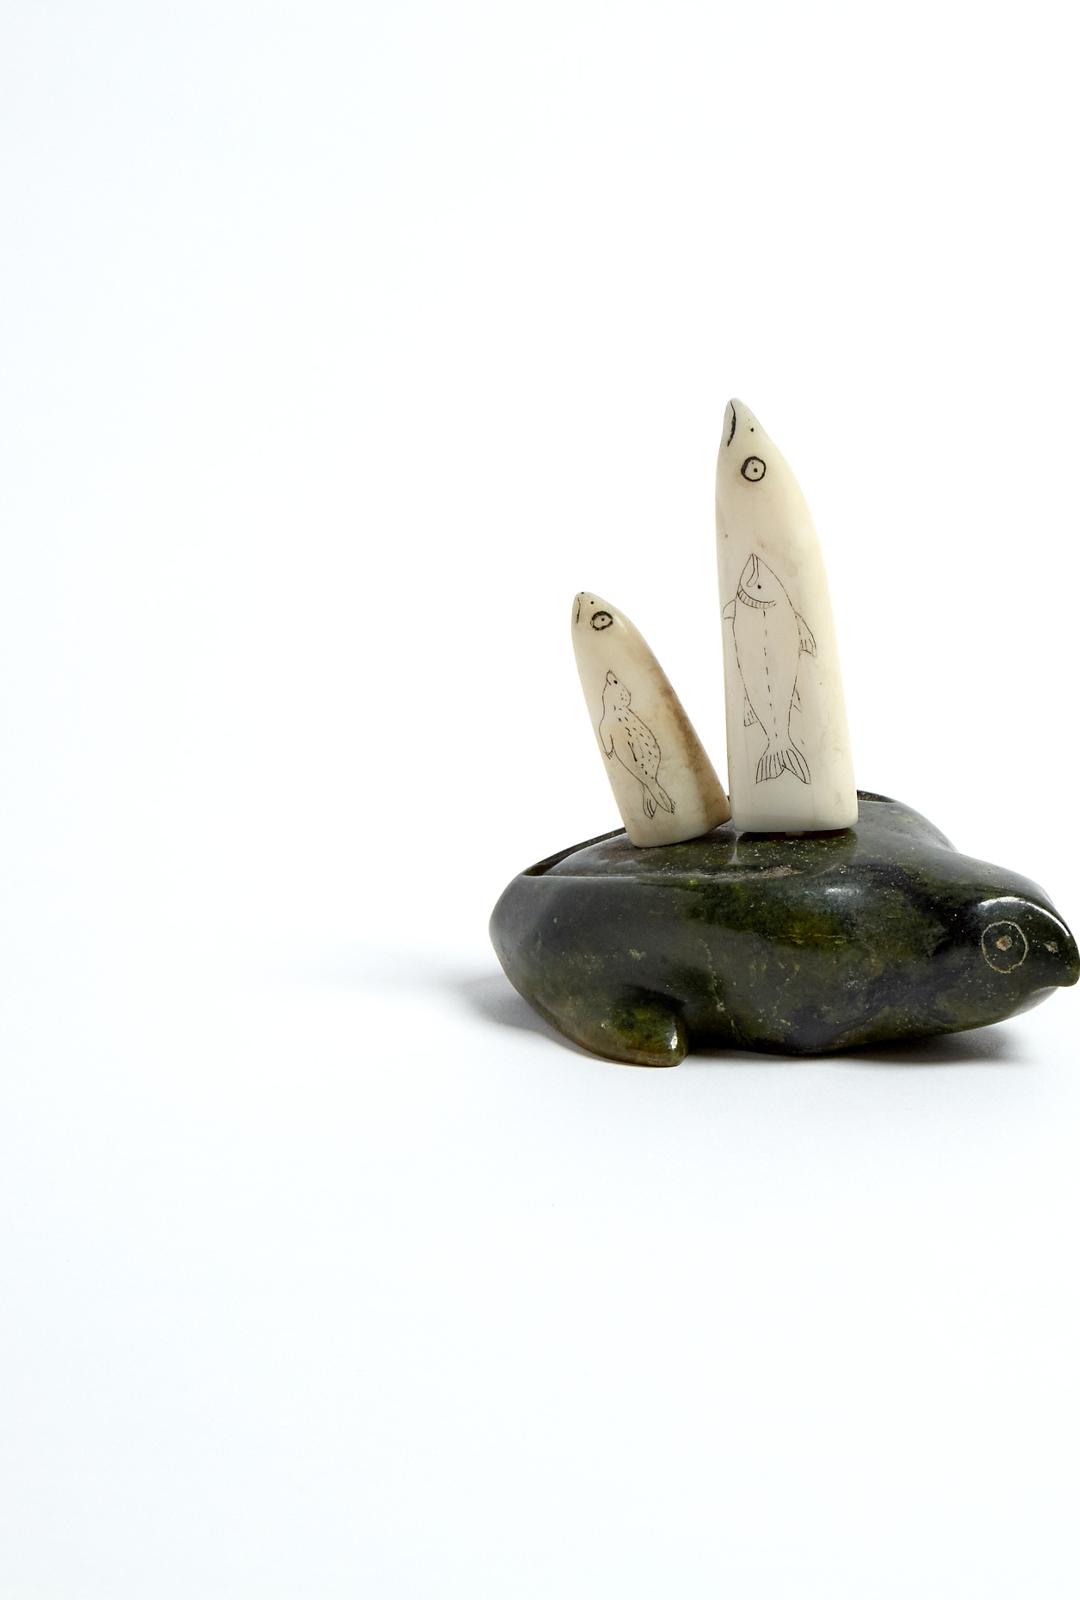 Omalluq Oshutsiaq (1948-2014) - Crouching Bird With Etched Ivory